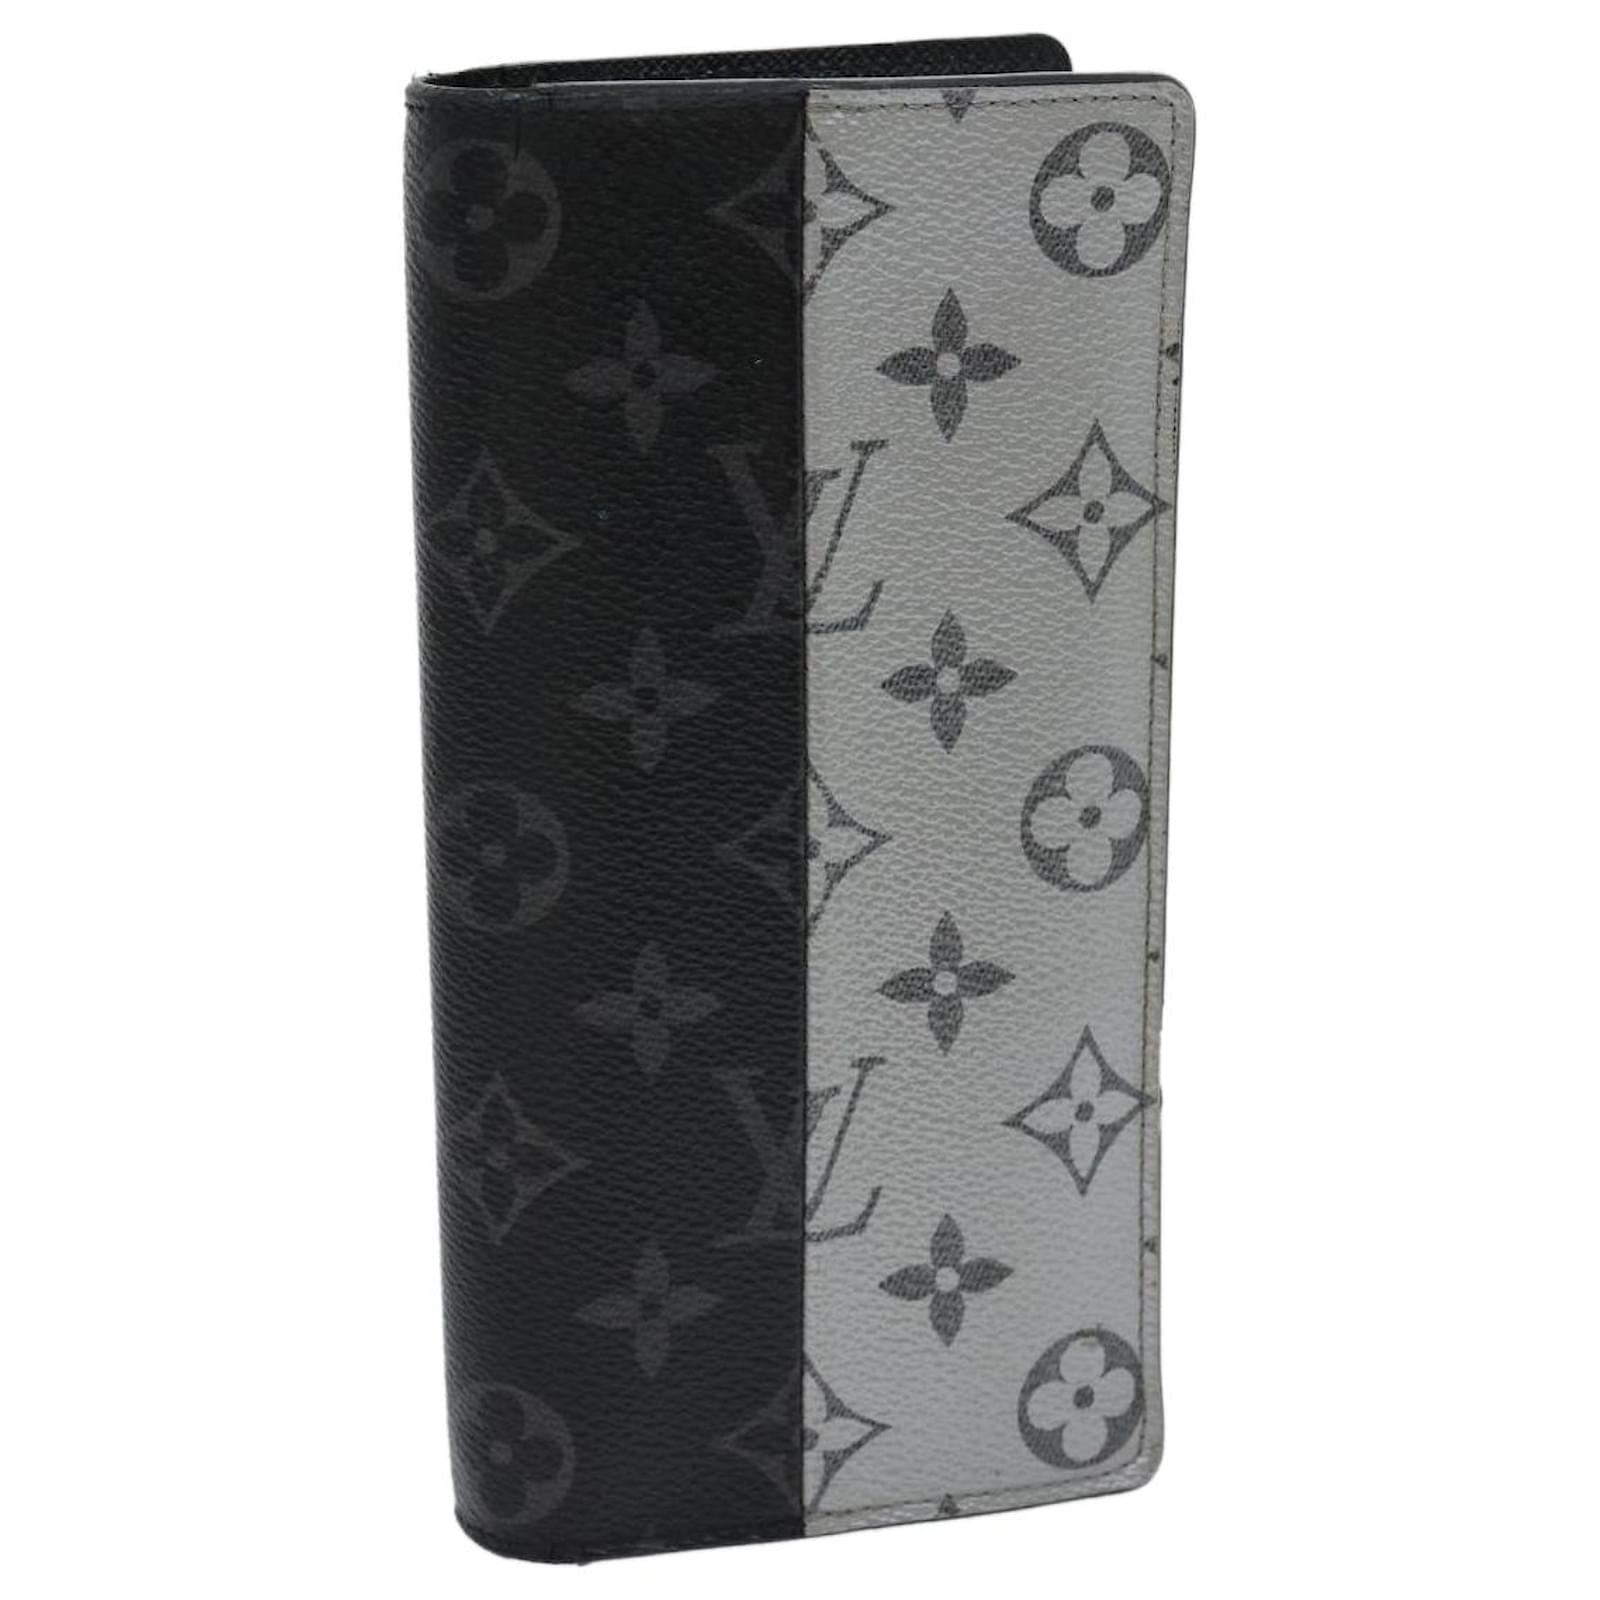 Louis vuitton/men's lady purse, BRAZZA wallet (black)